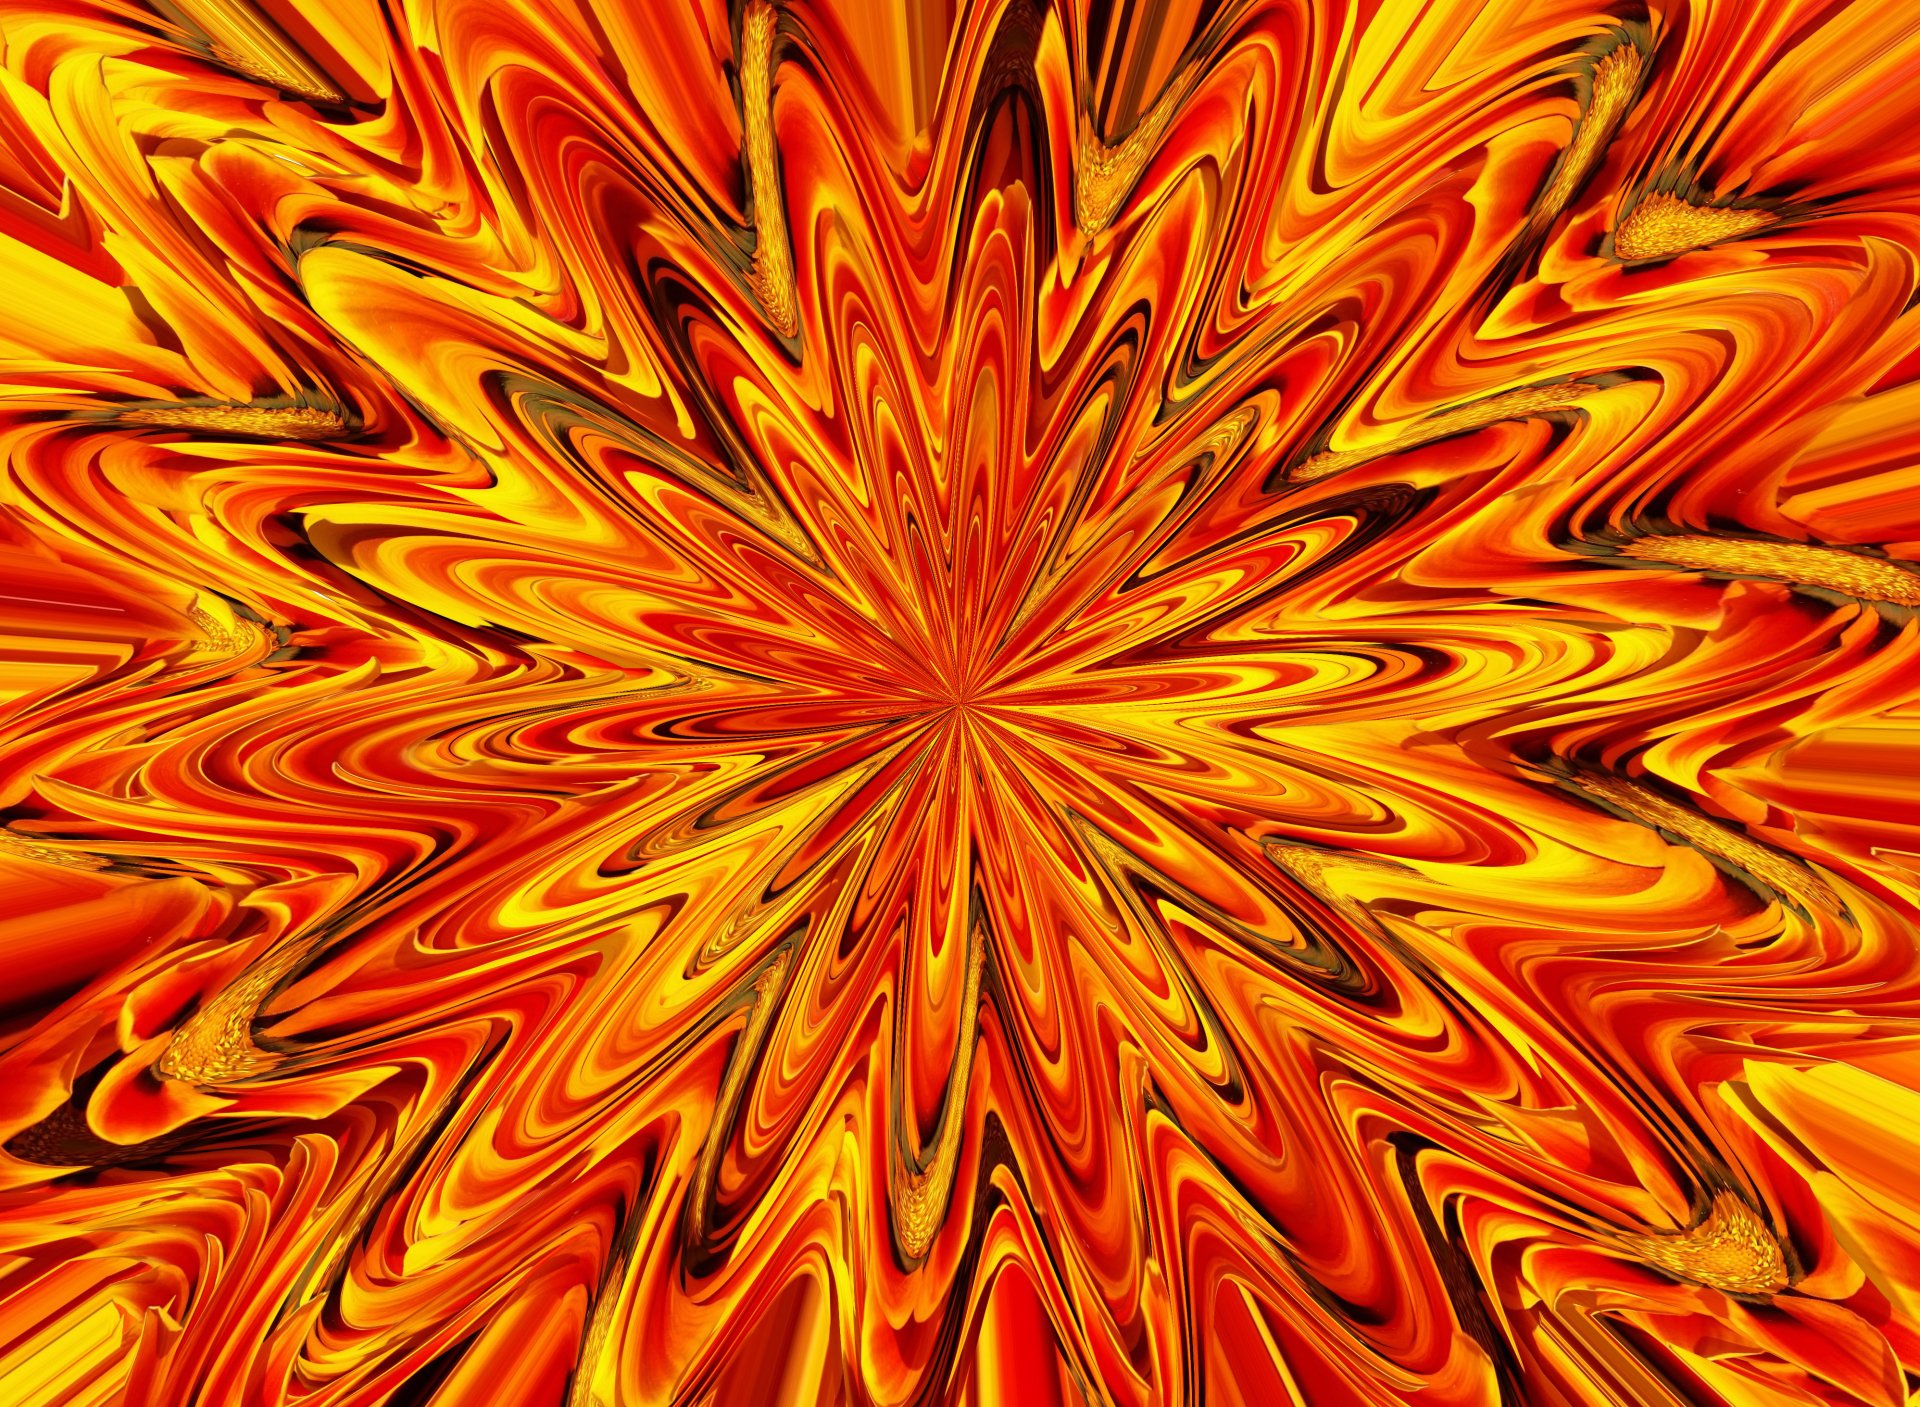 Abstract Orange 4k Ultra HD Wallpaper by Susanlu4esm